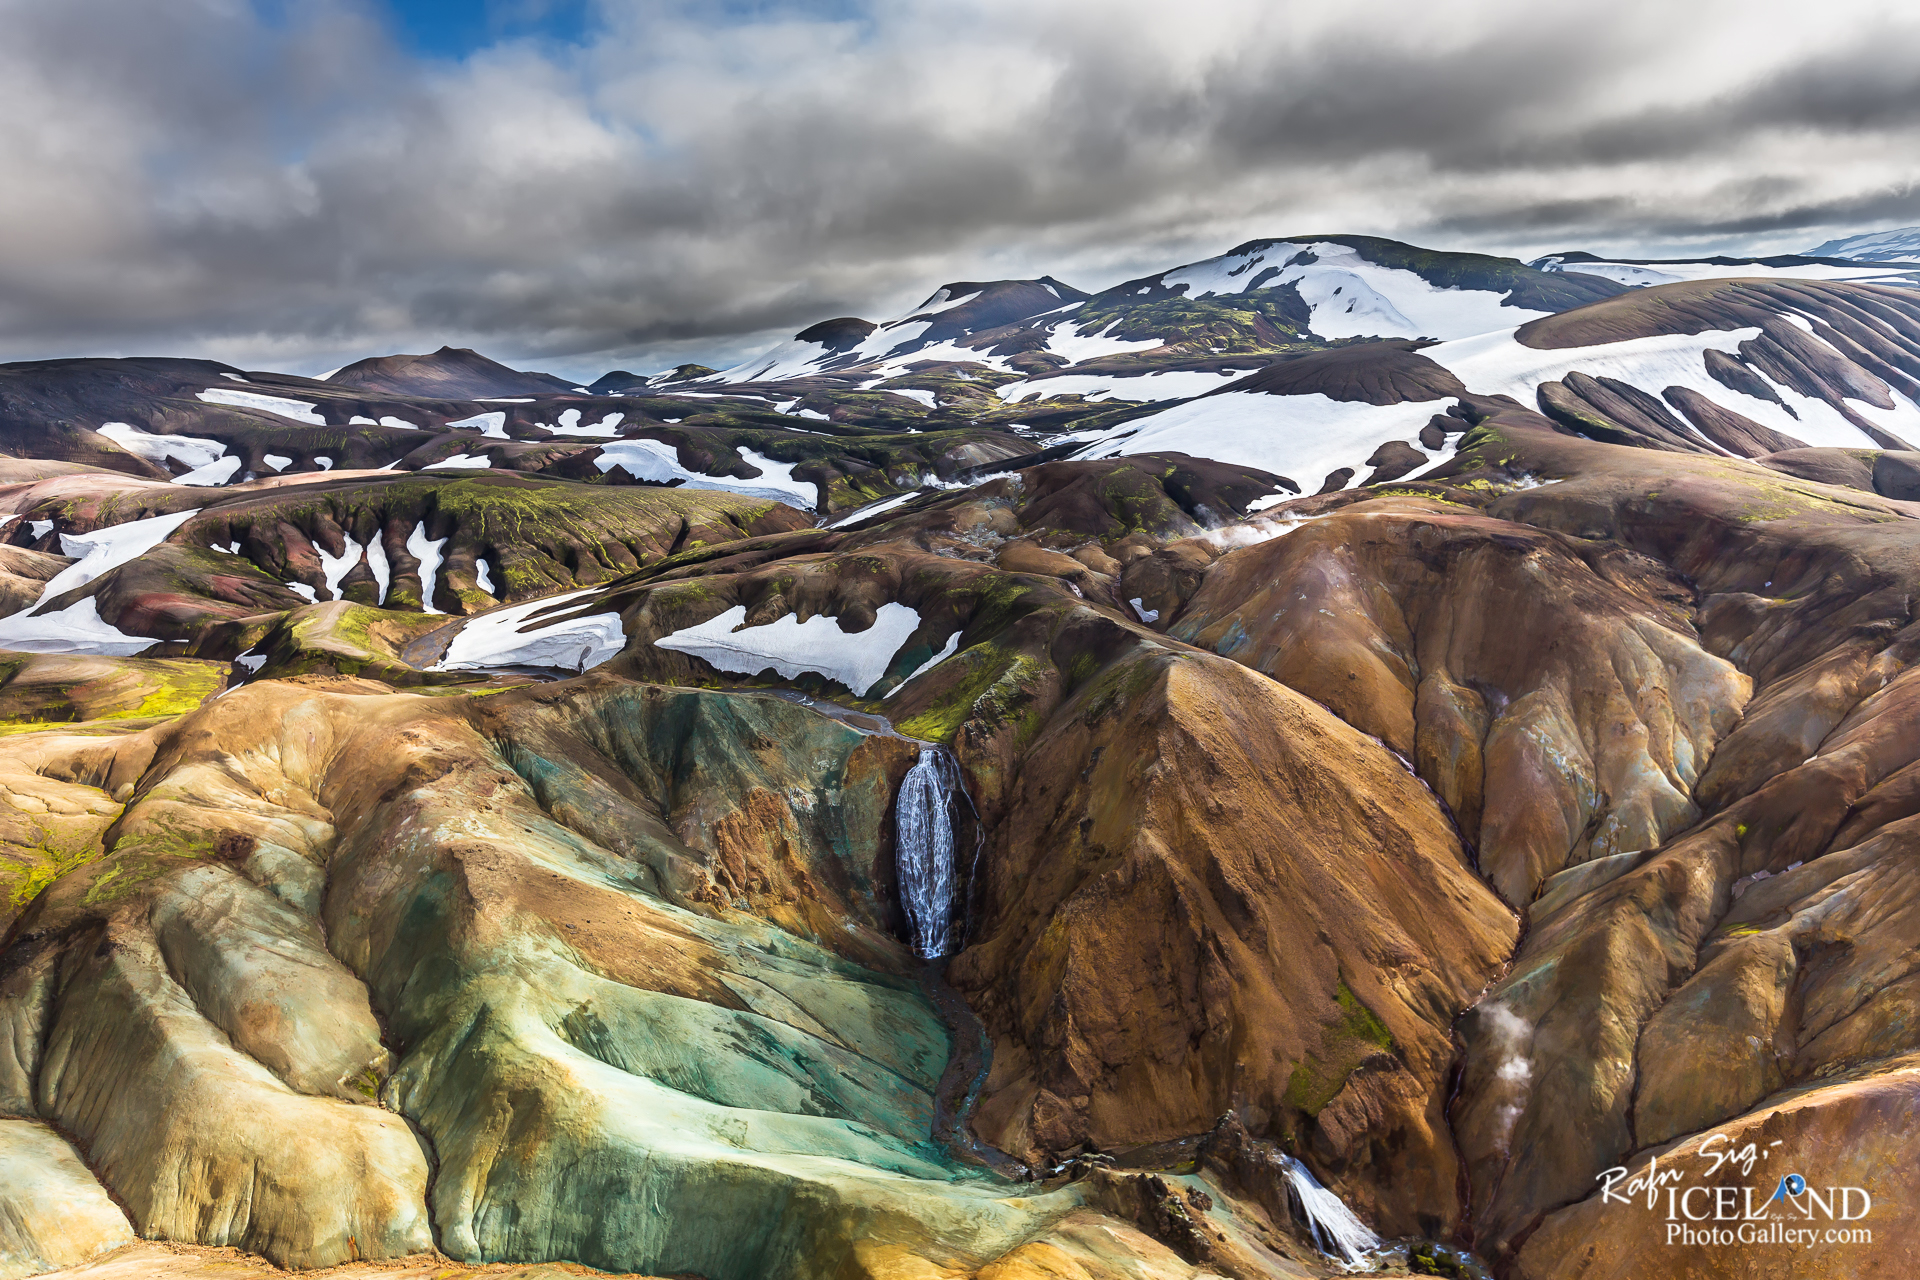 Landmannalaugar Highlands │ Iceland Landscape from Air